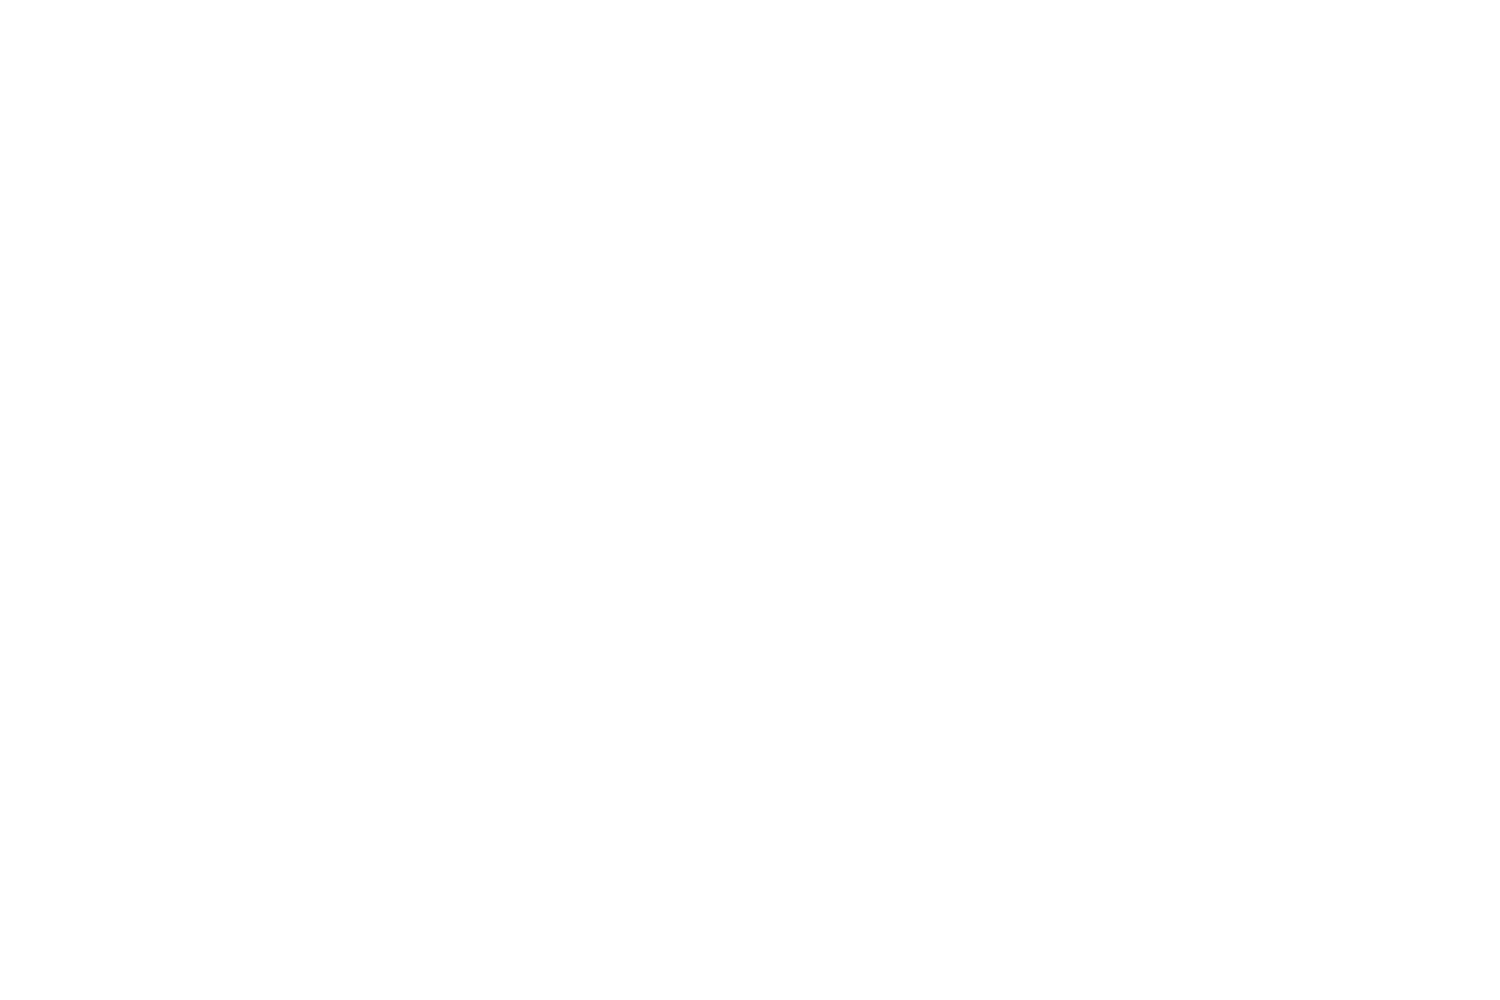 Melon Studio